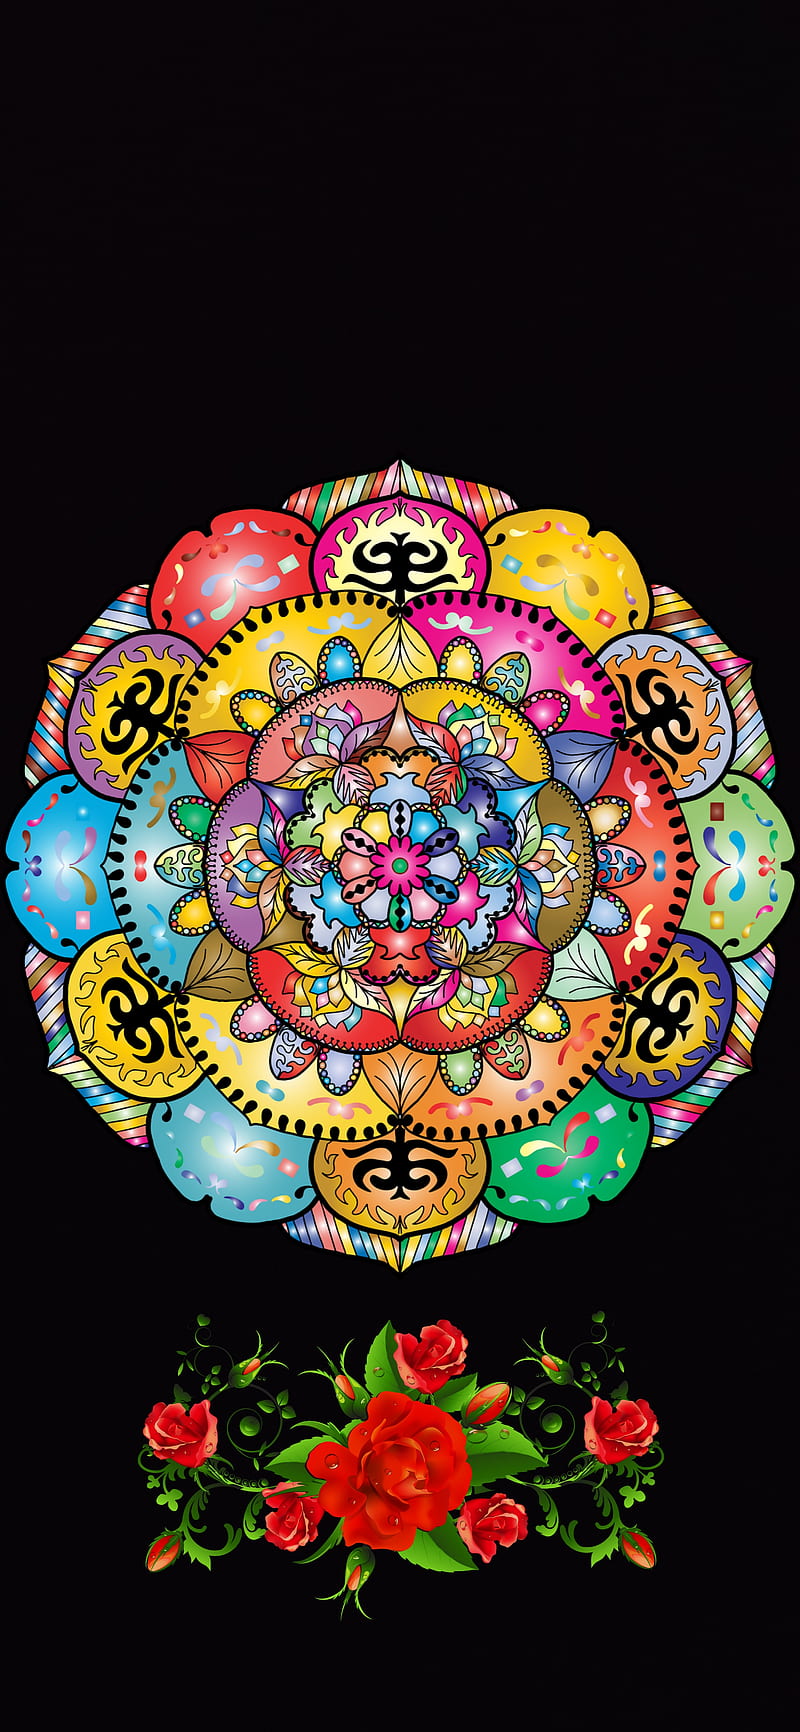 Mandala Wallpaper Images  Free Download on Freepik